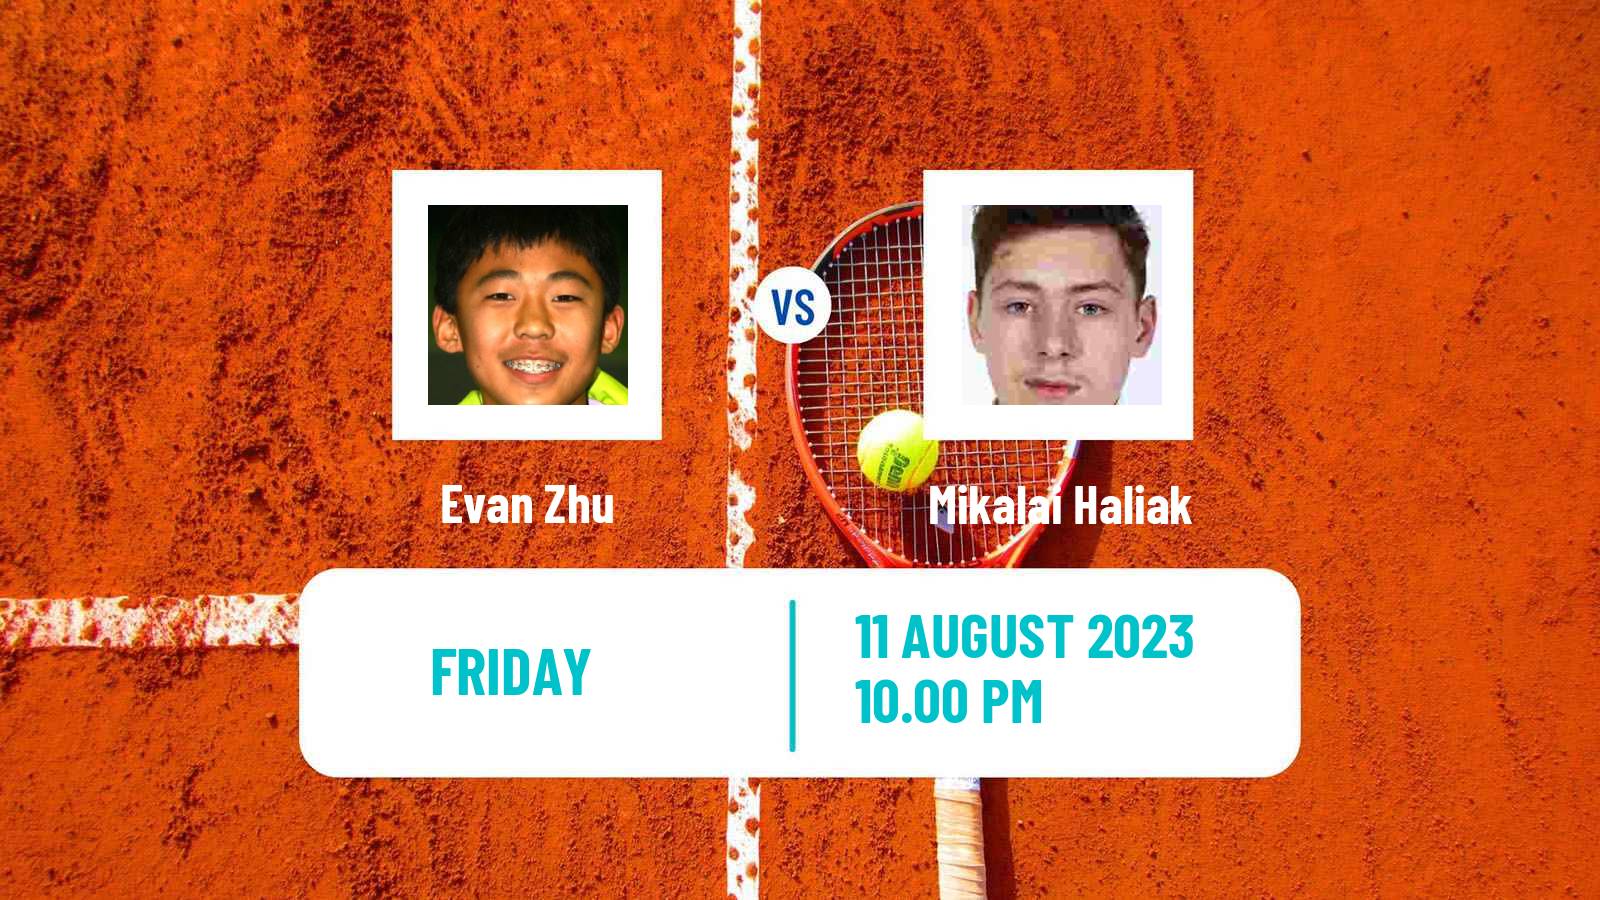 Tennis ITF M25 Baotou Men Evan Zhu - Mikalai Haliak